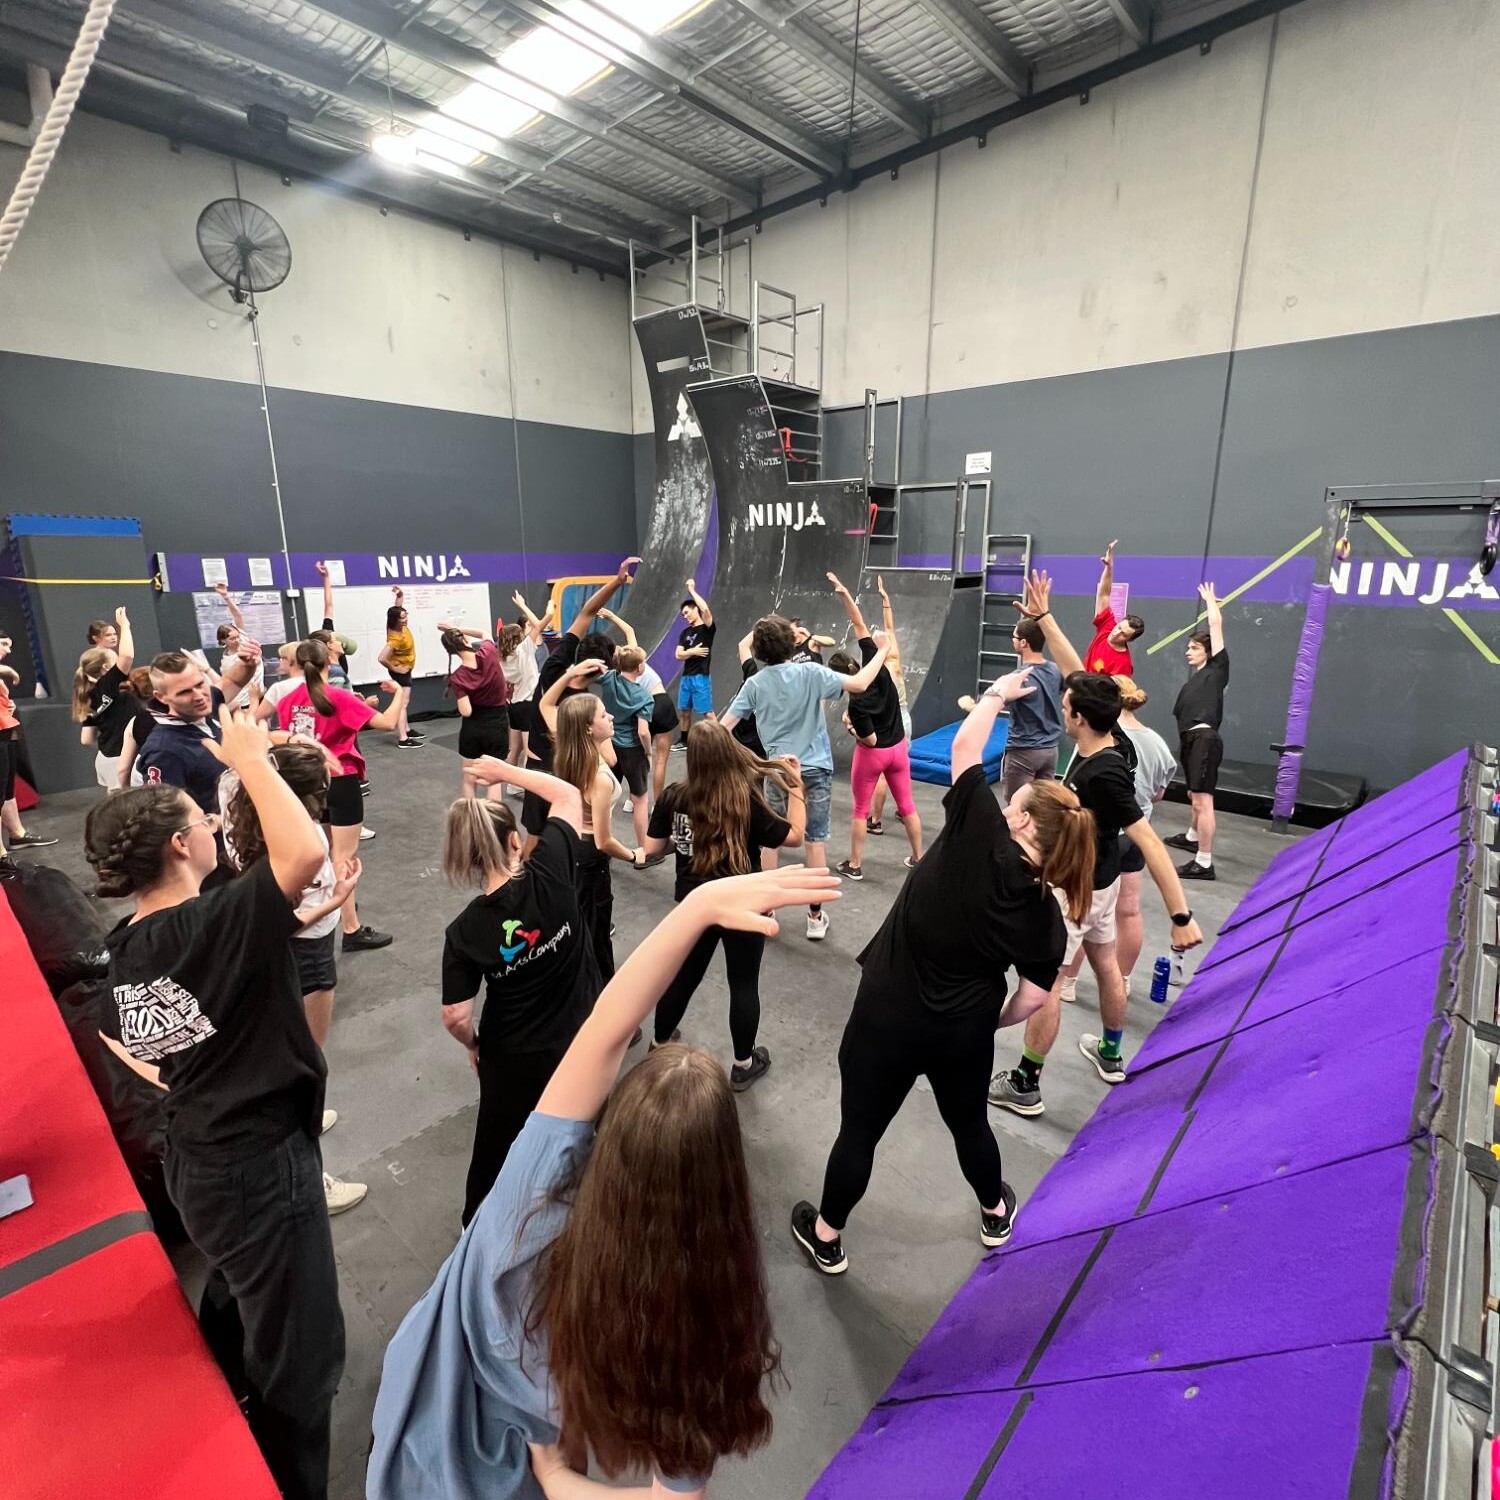 20230128_001426415_iOS 20230128 001426415 iOS uai at a Ninja Warrior gym in Melbourne, Australia.